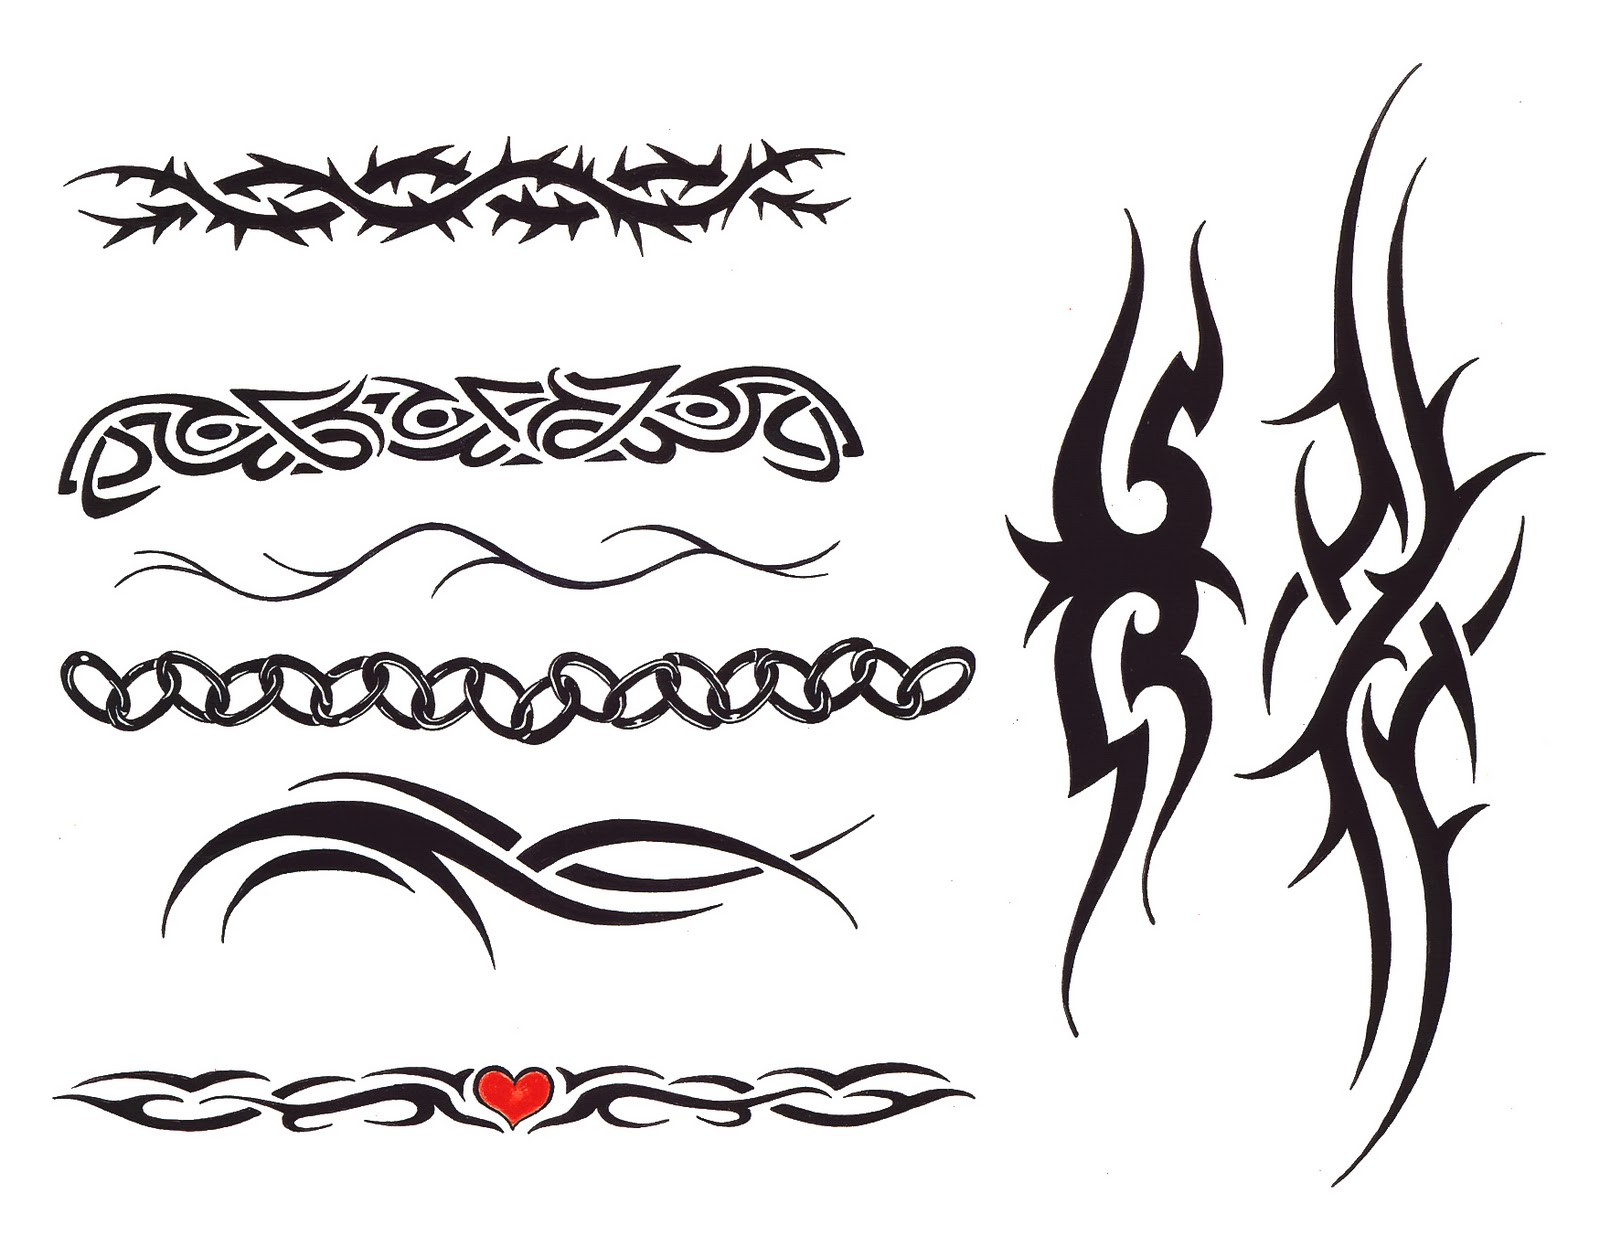 Tribal armband tattoos designs